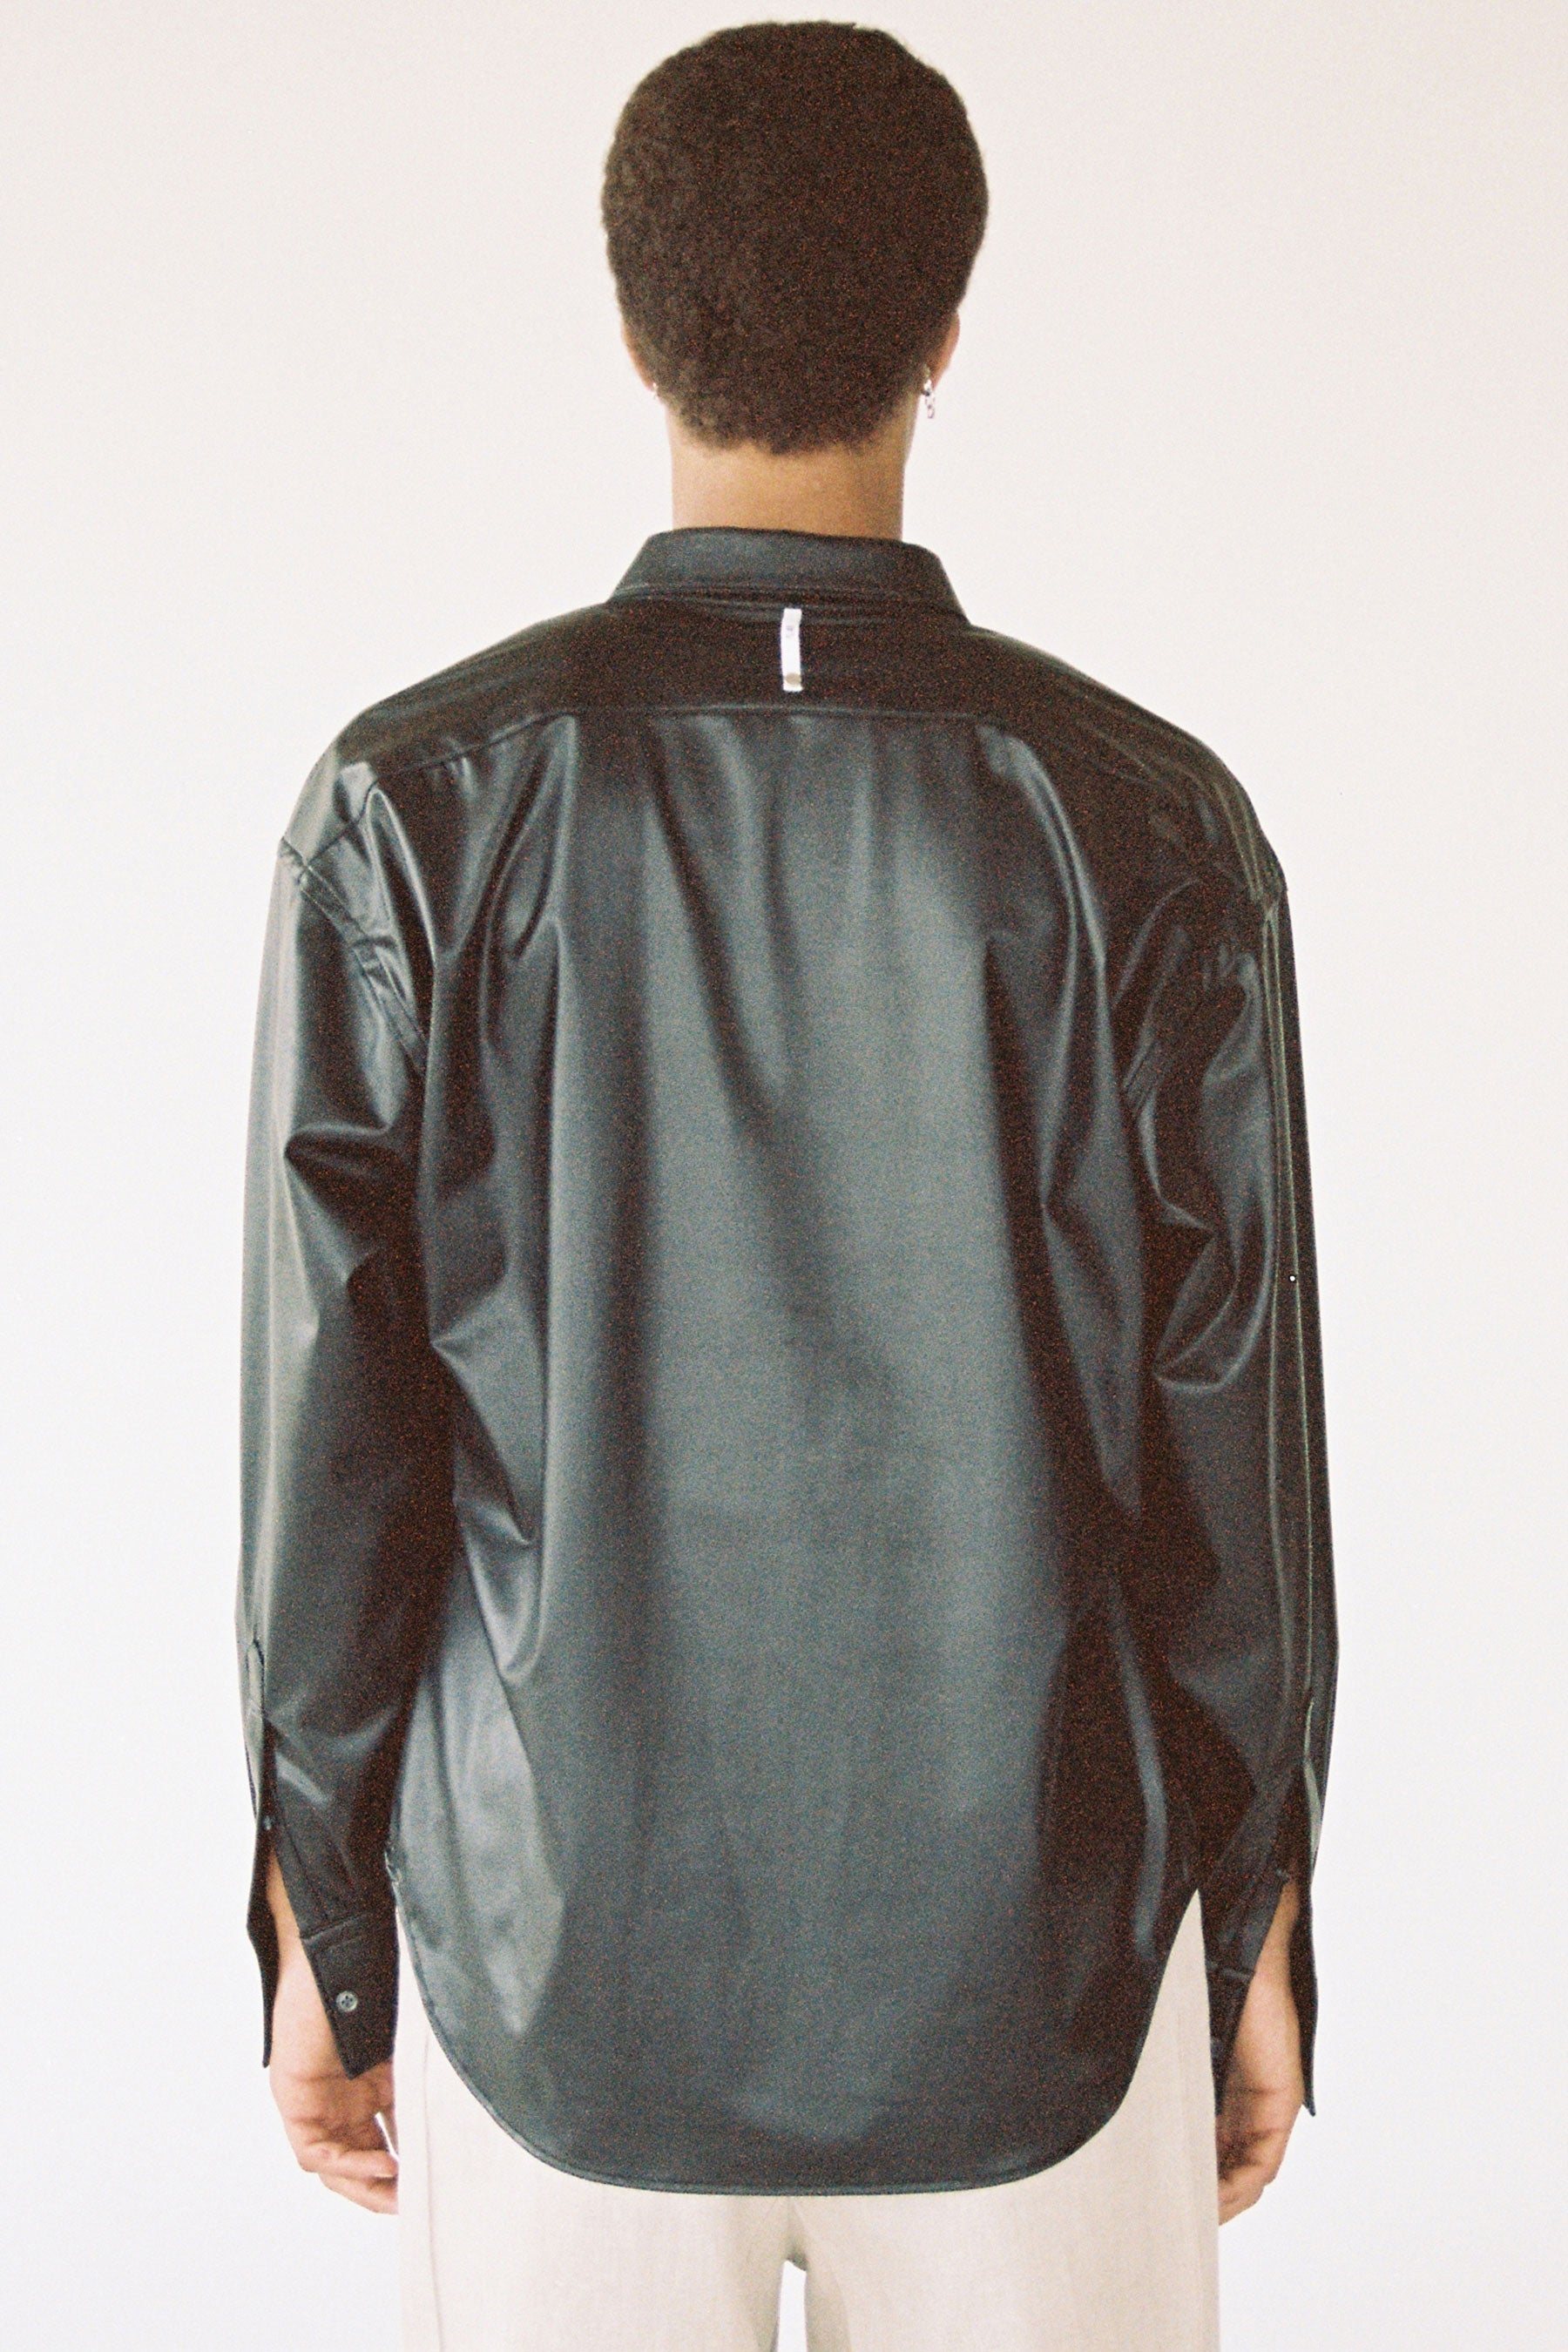 Black Polyamide Faux Leather Trapezium Shirt